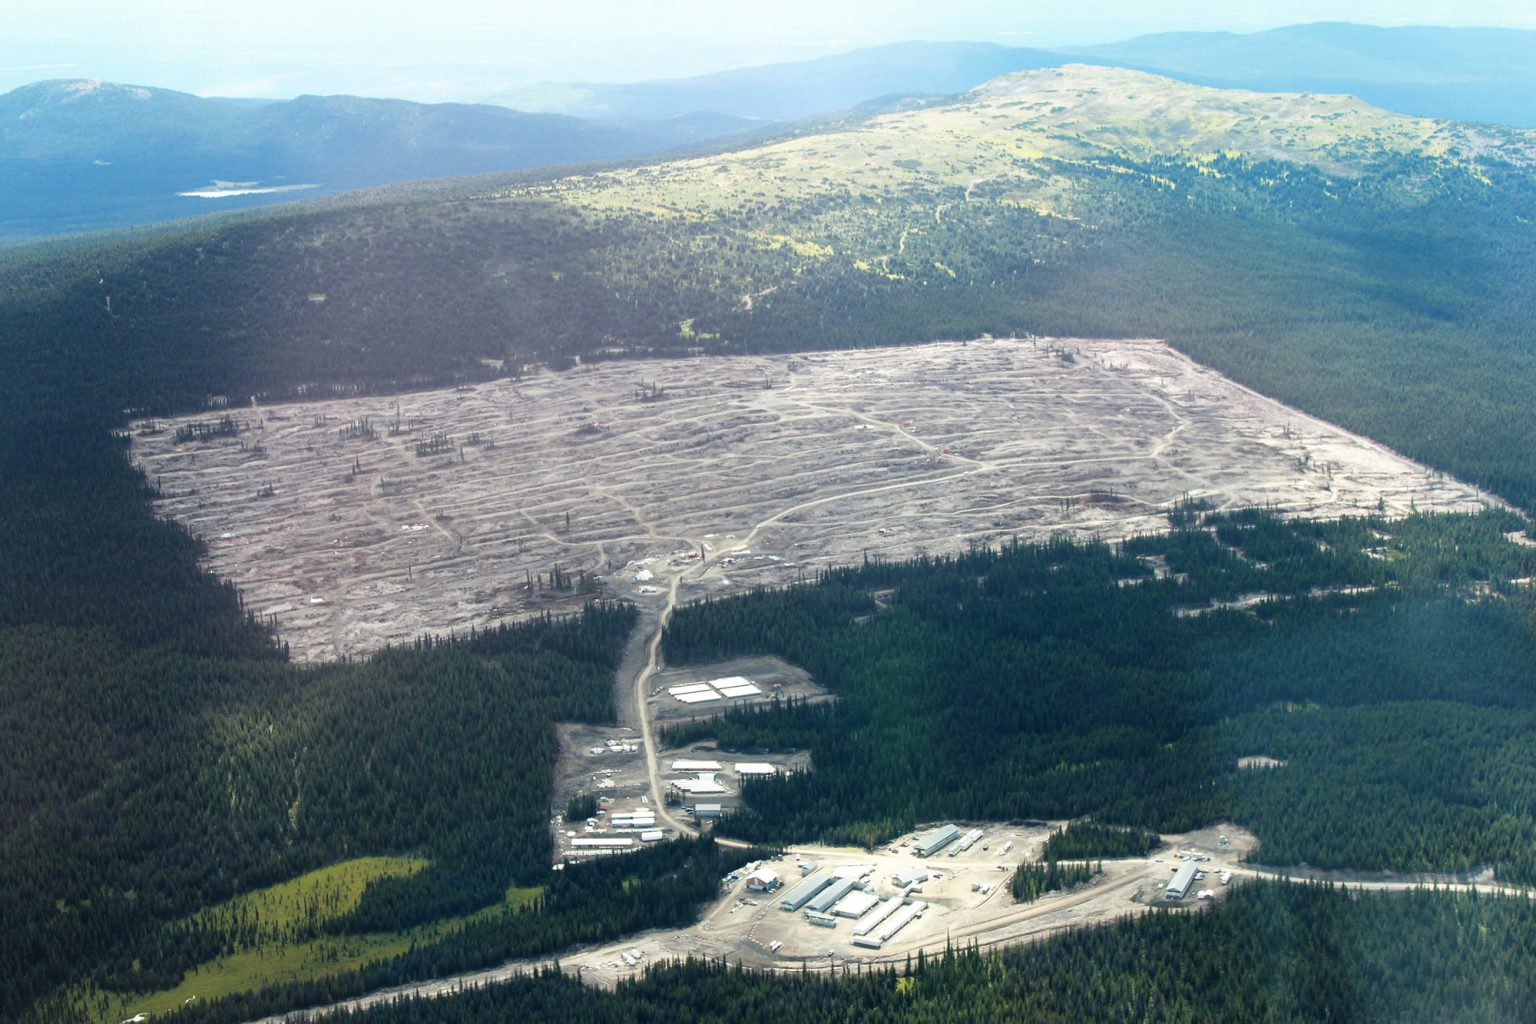 Artemis Gold pegs Blackwater mine as $10bn ‘economic engine’